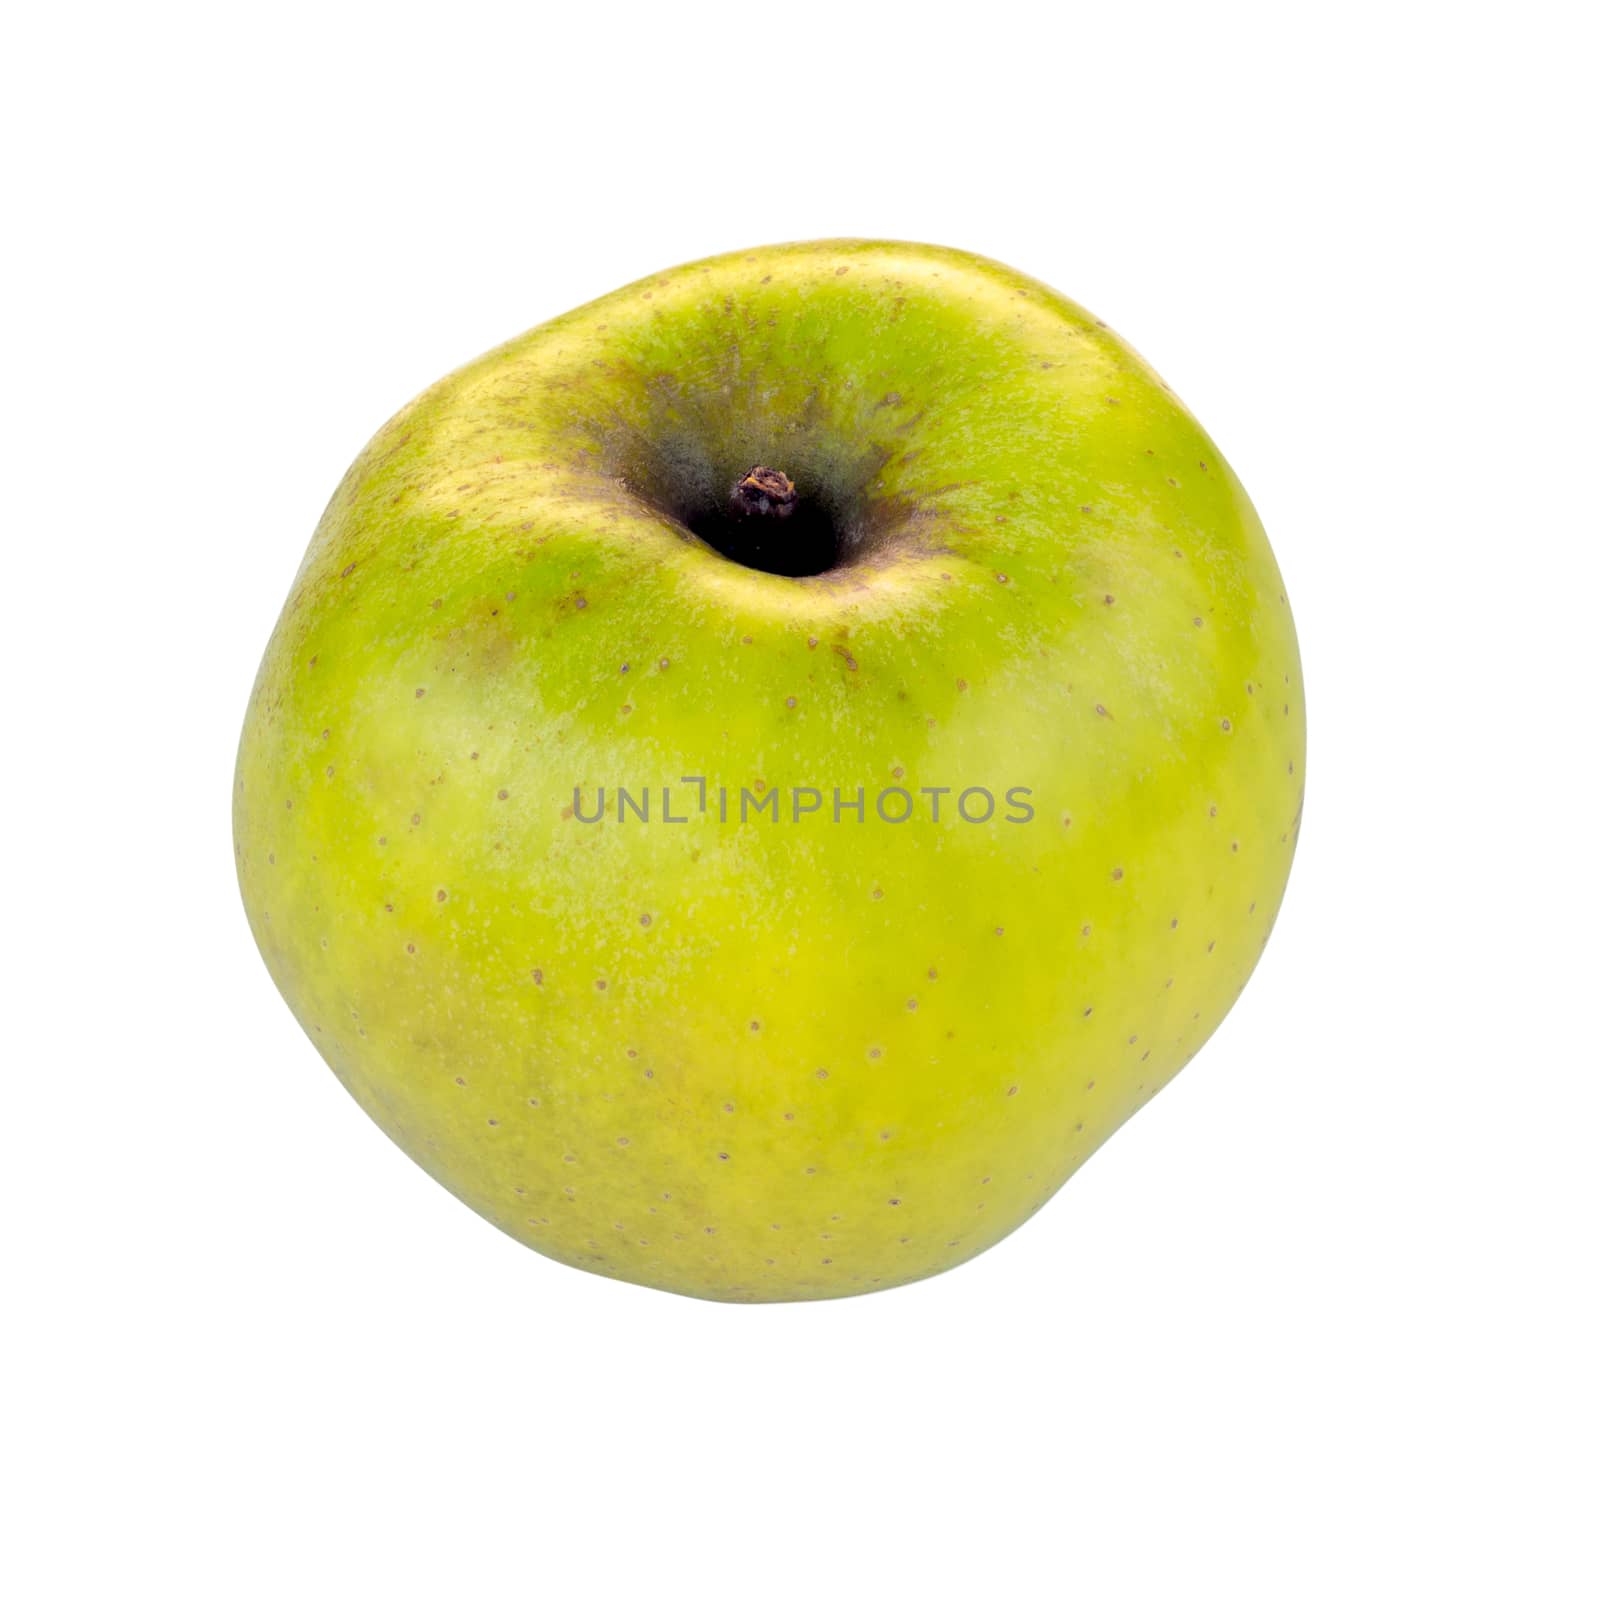 Yellow Renetta Apple on white background by matteocurcio